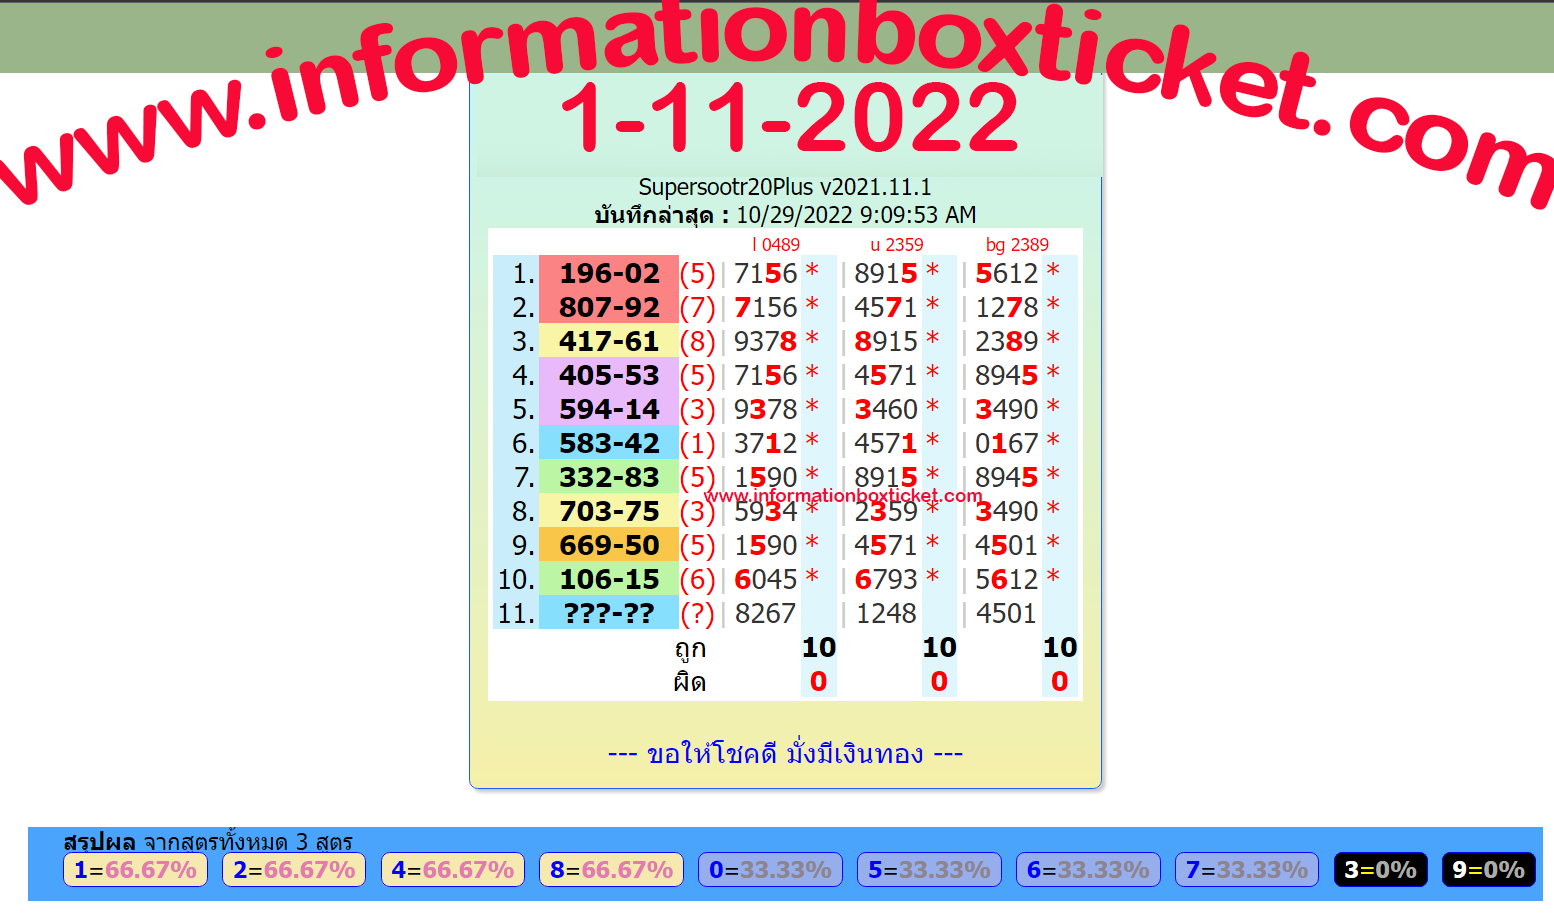 www.informationboxticket.com